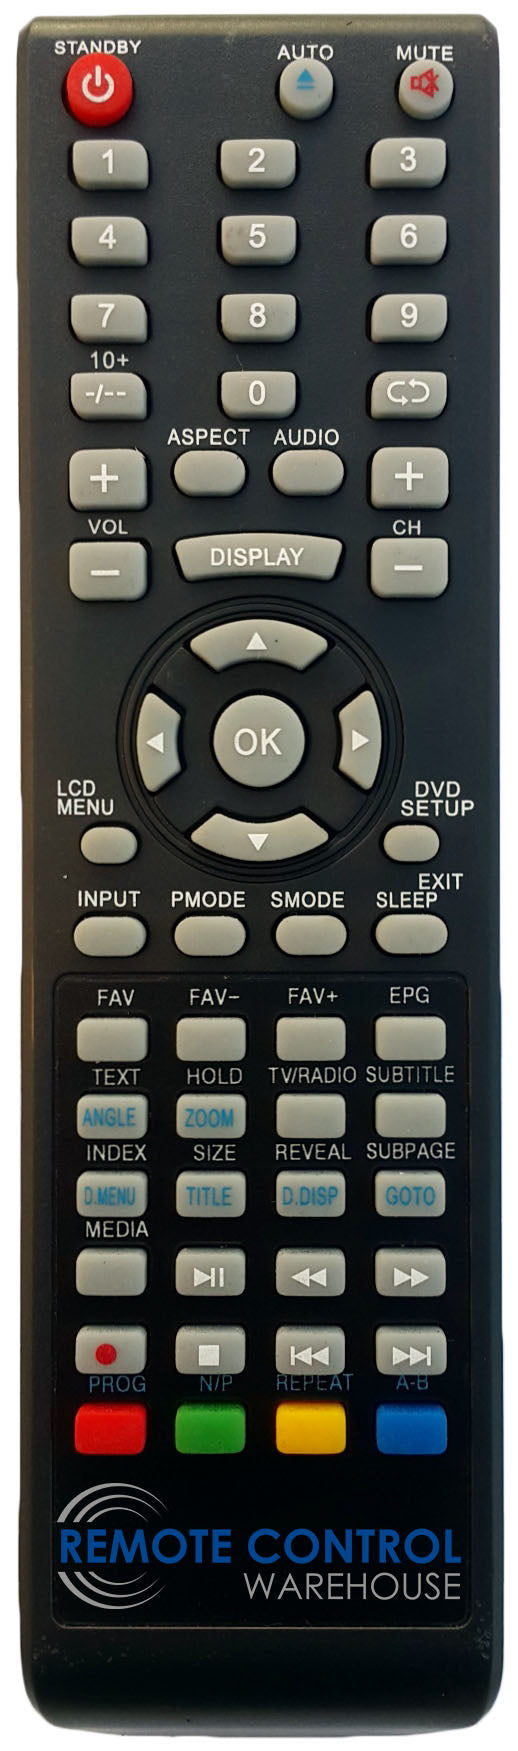 TECO LED22GFRDA LCD TV Replacement Remote Control